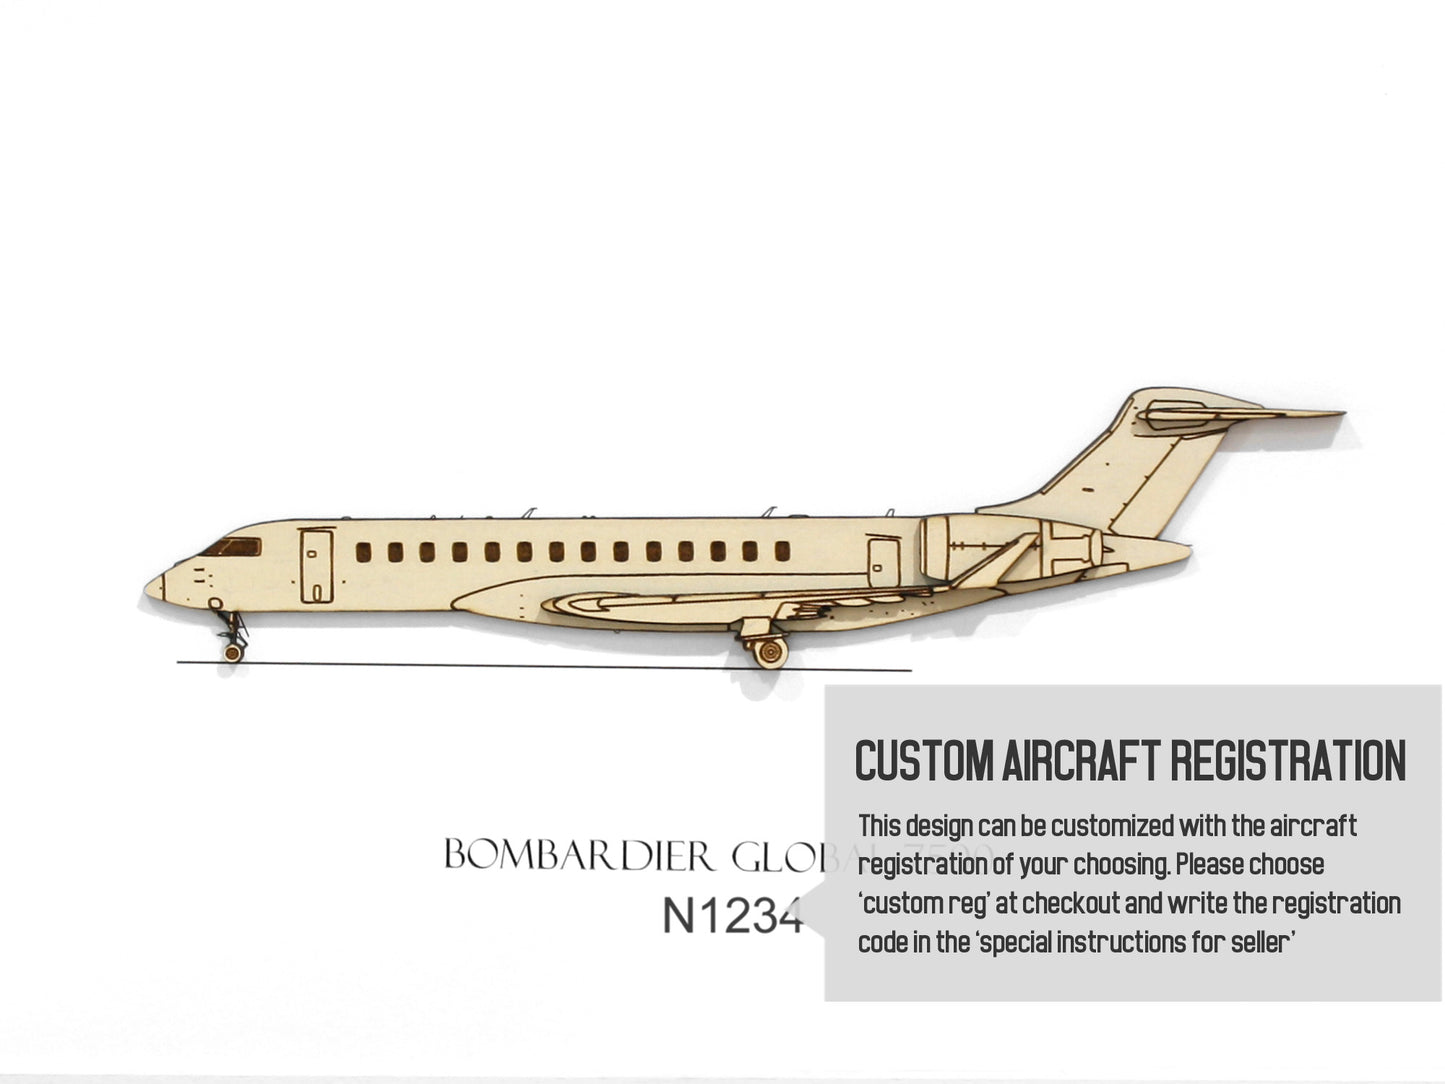 Bombardier Global 7500 custom aviation art